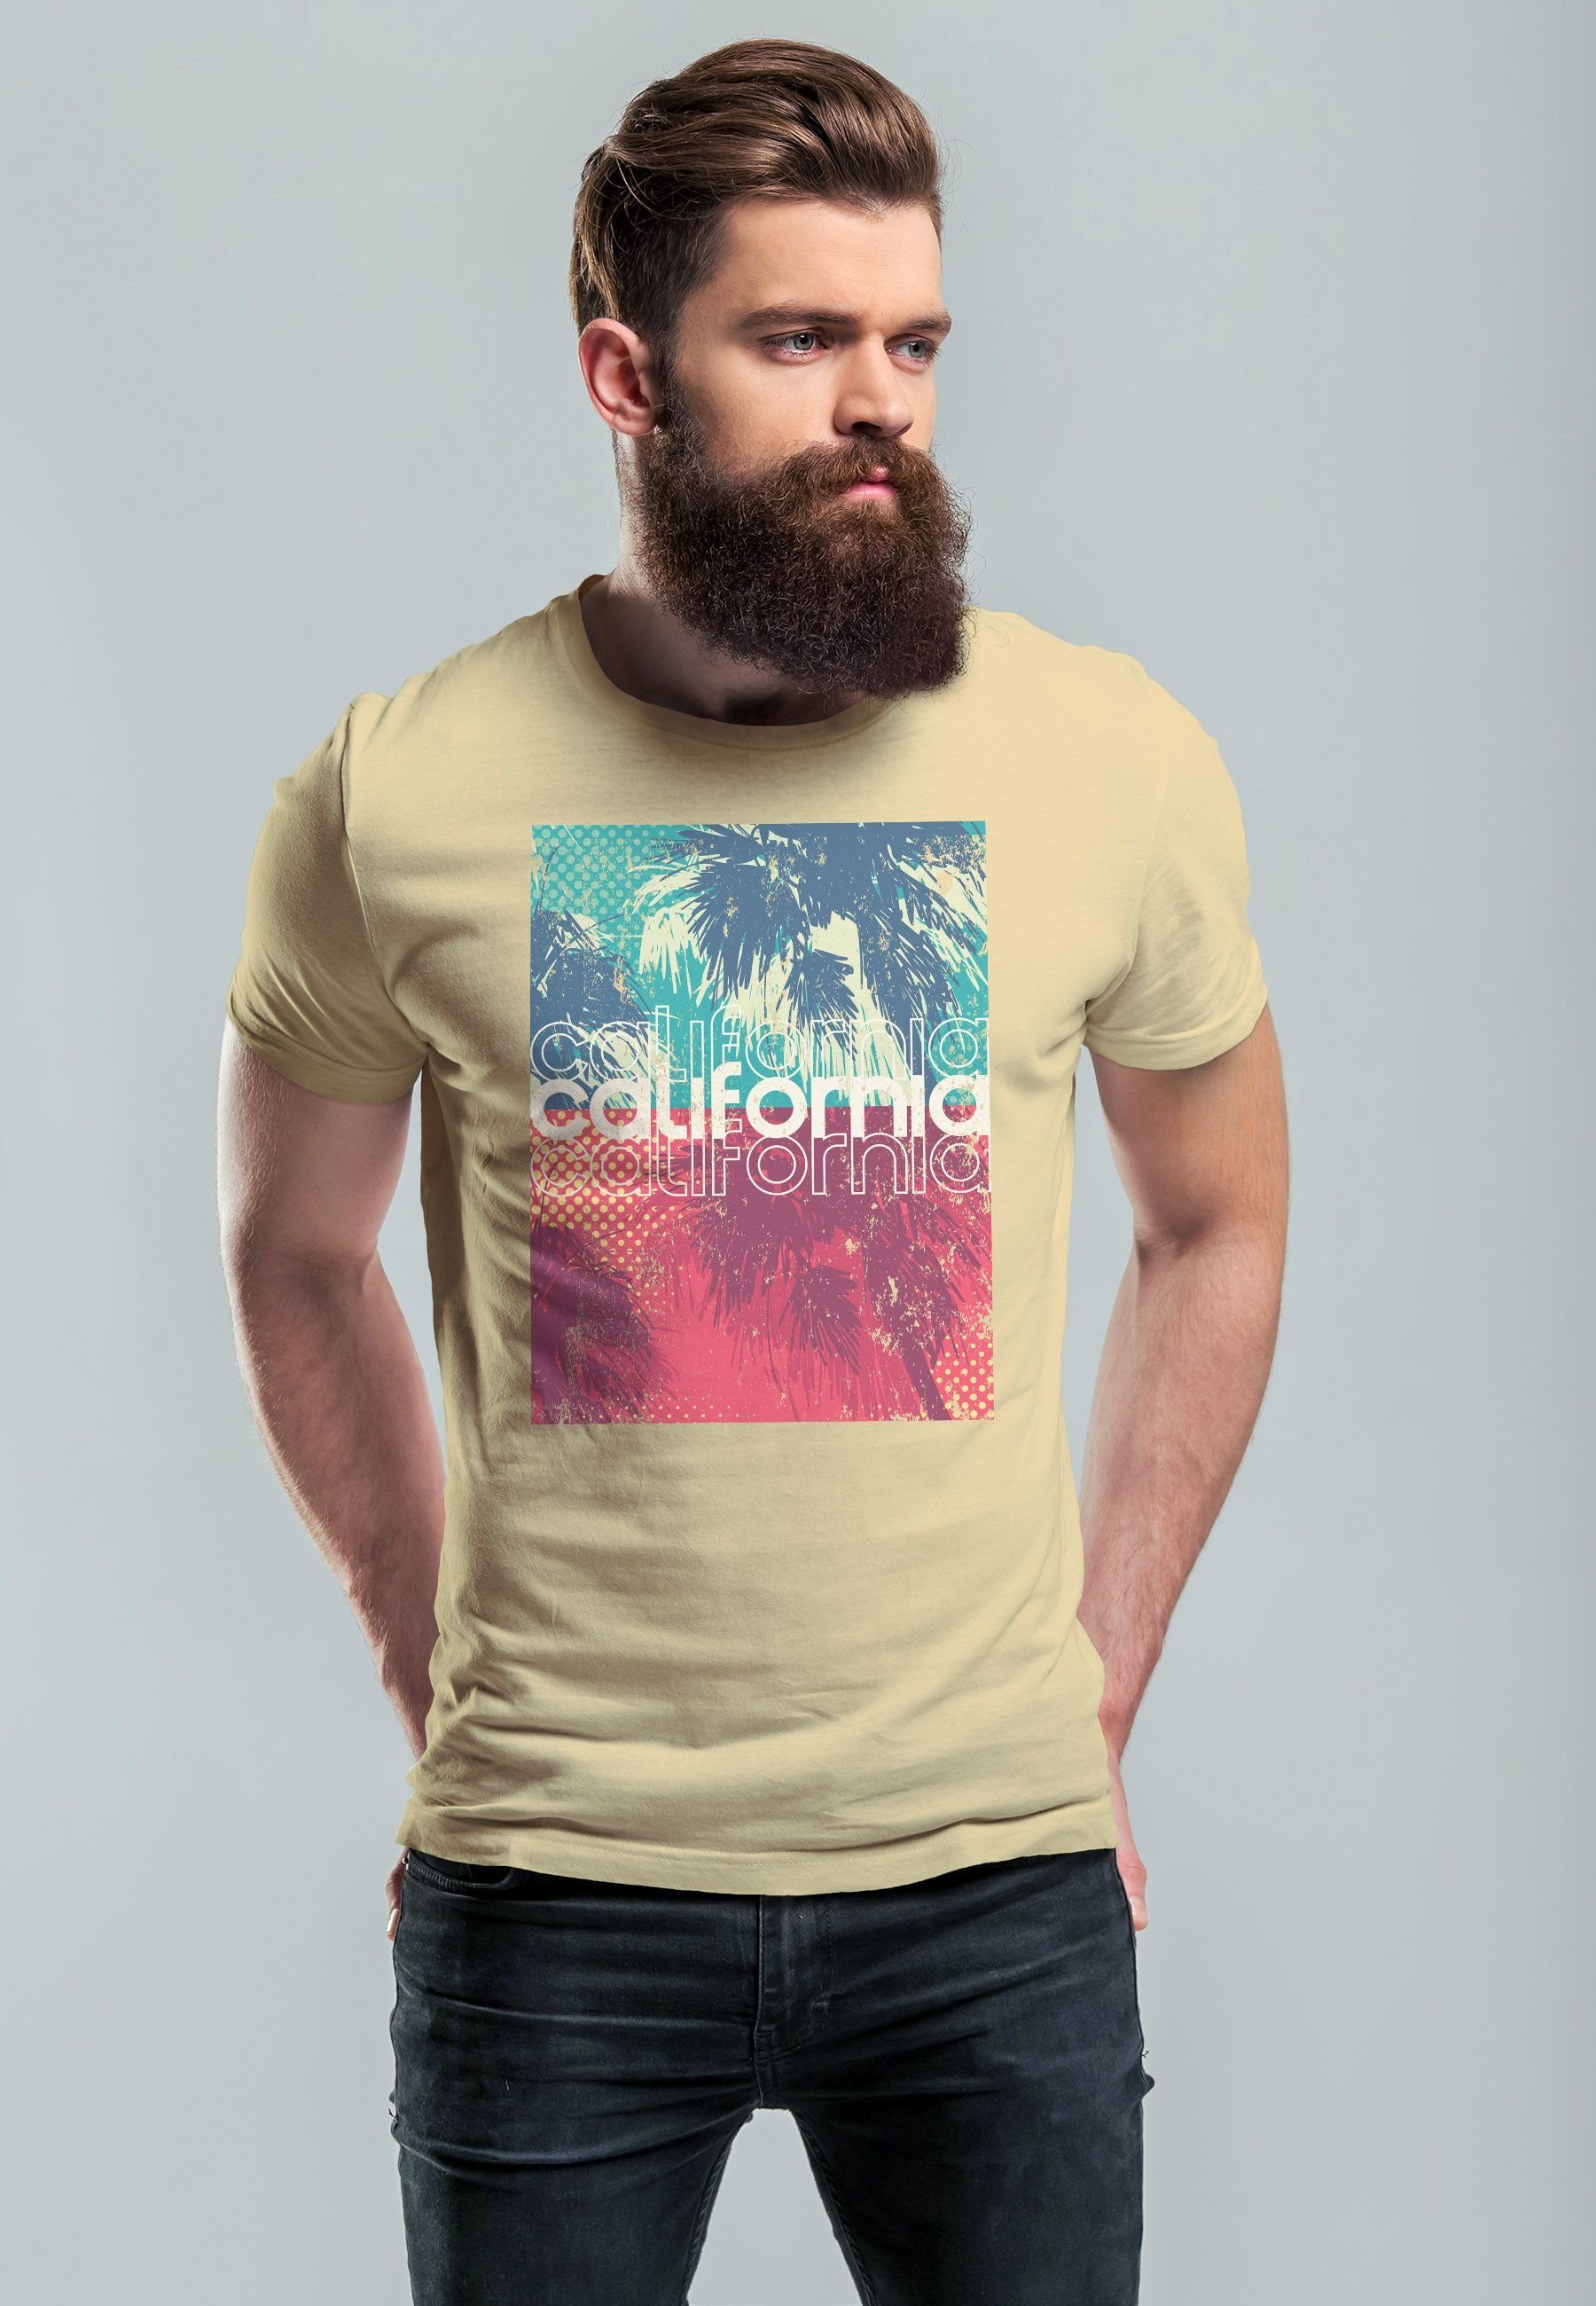 Aufdruck Print-Shirt mit Palmen natur Foto Print Sommer California Top Neverless Print Abstra Herren T-Shirt